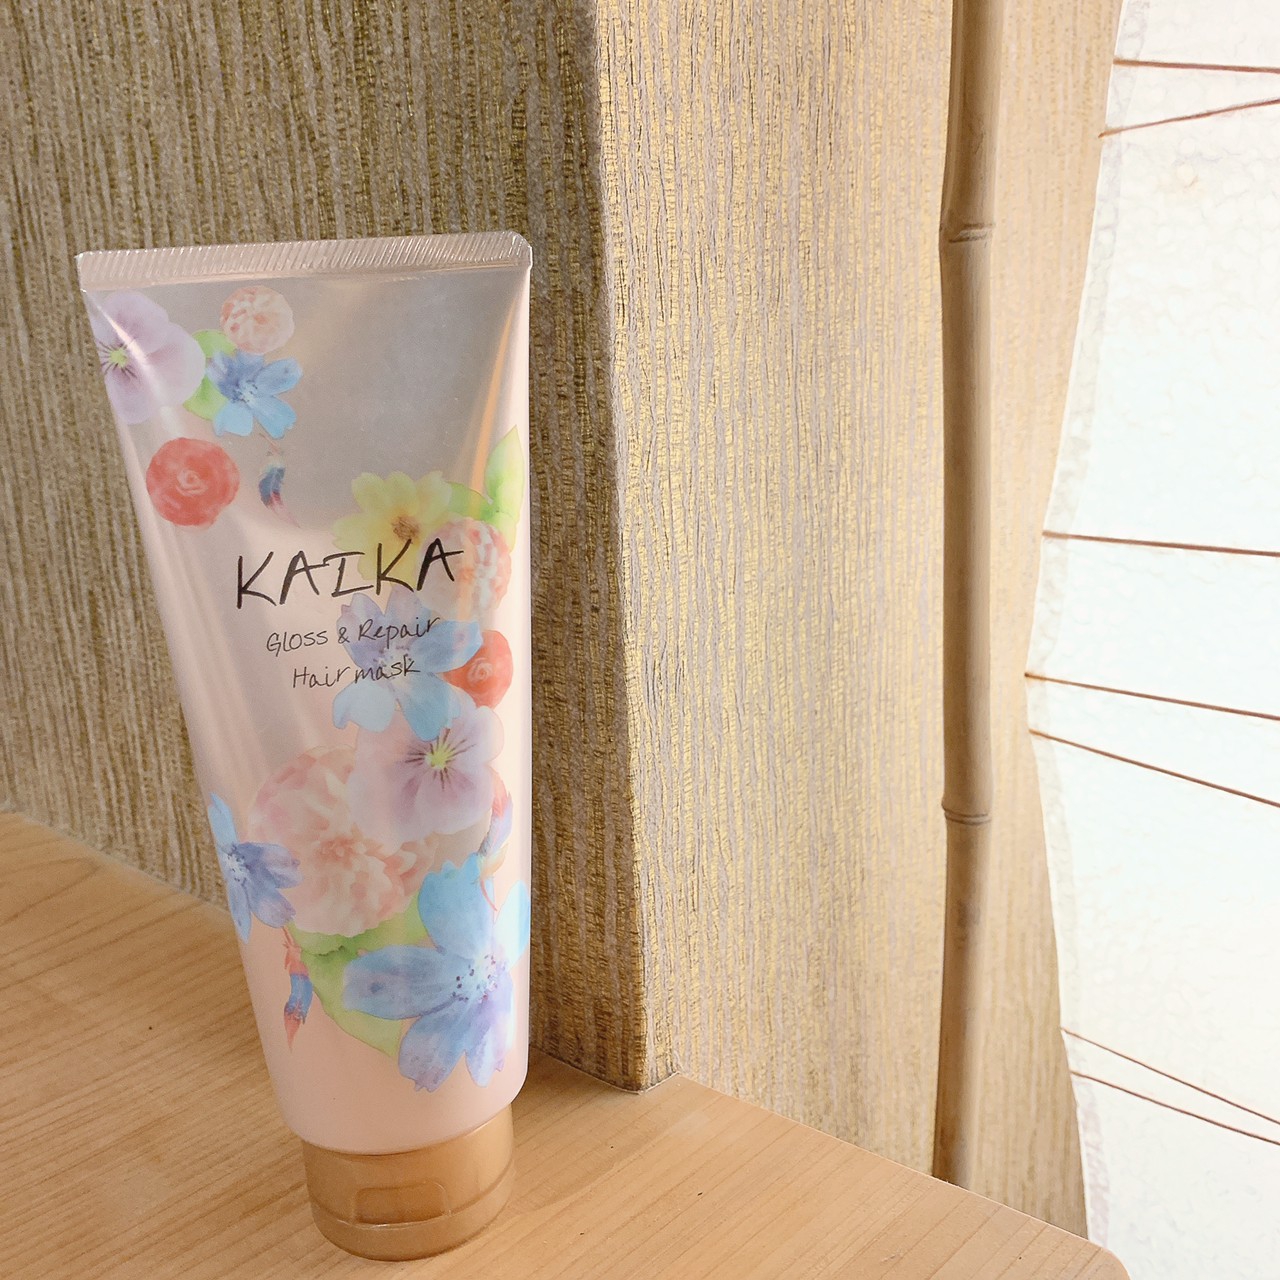 KAIKA グロス&リペアヘアマスクを使ったkana_cafe_timeさんのクチコミ画像4